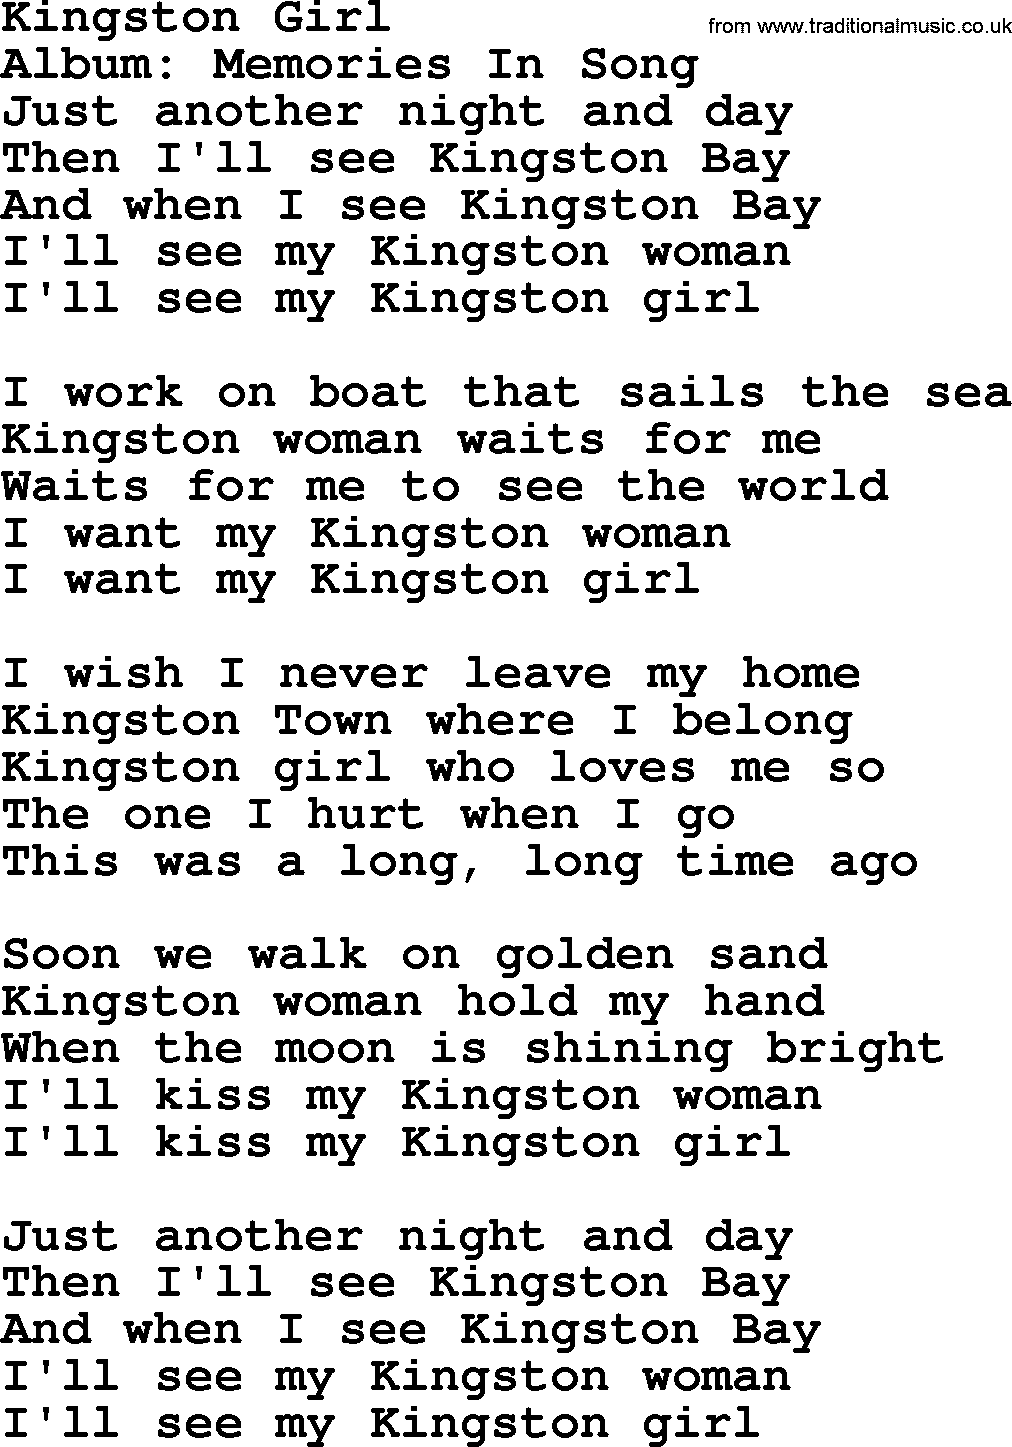 Marty Robbins song: Kingston Girl, lyrics